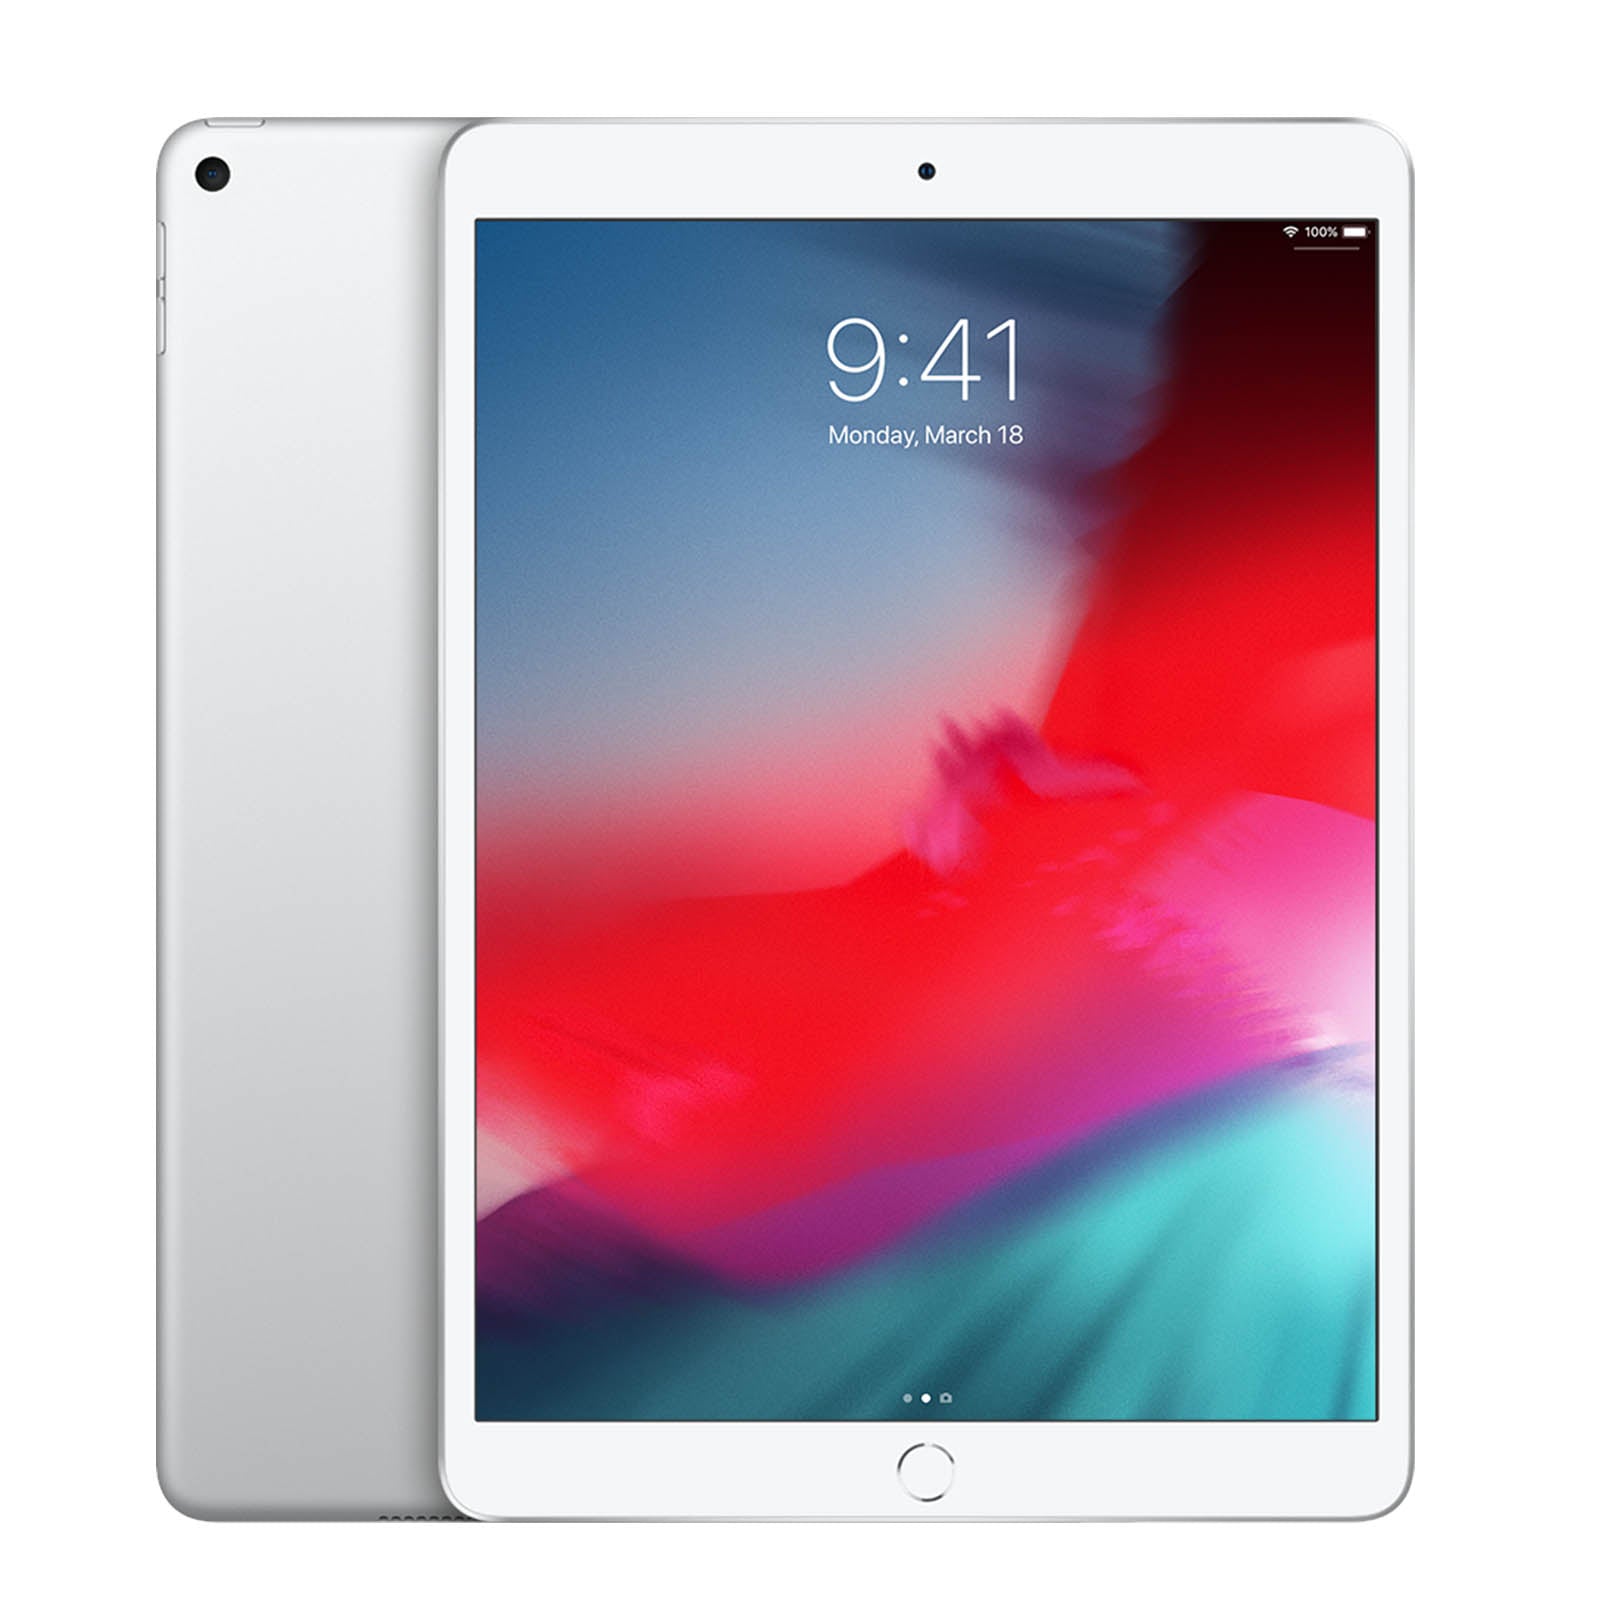 Apple iPad Air 3 64GB WiFi - Silber - Gut